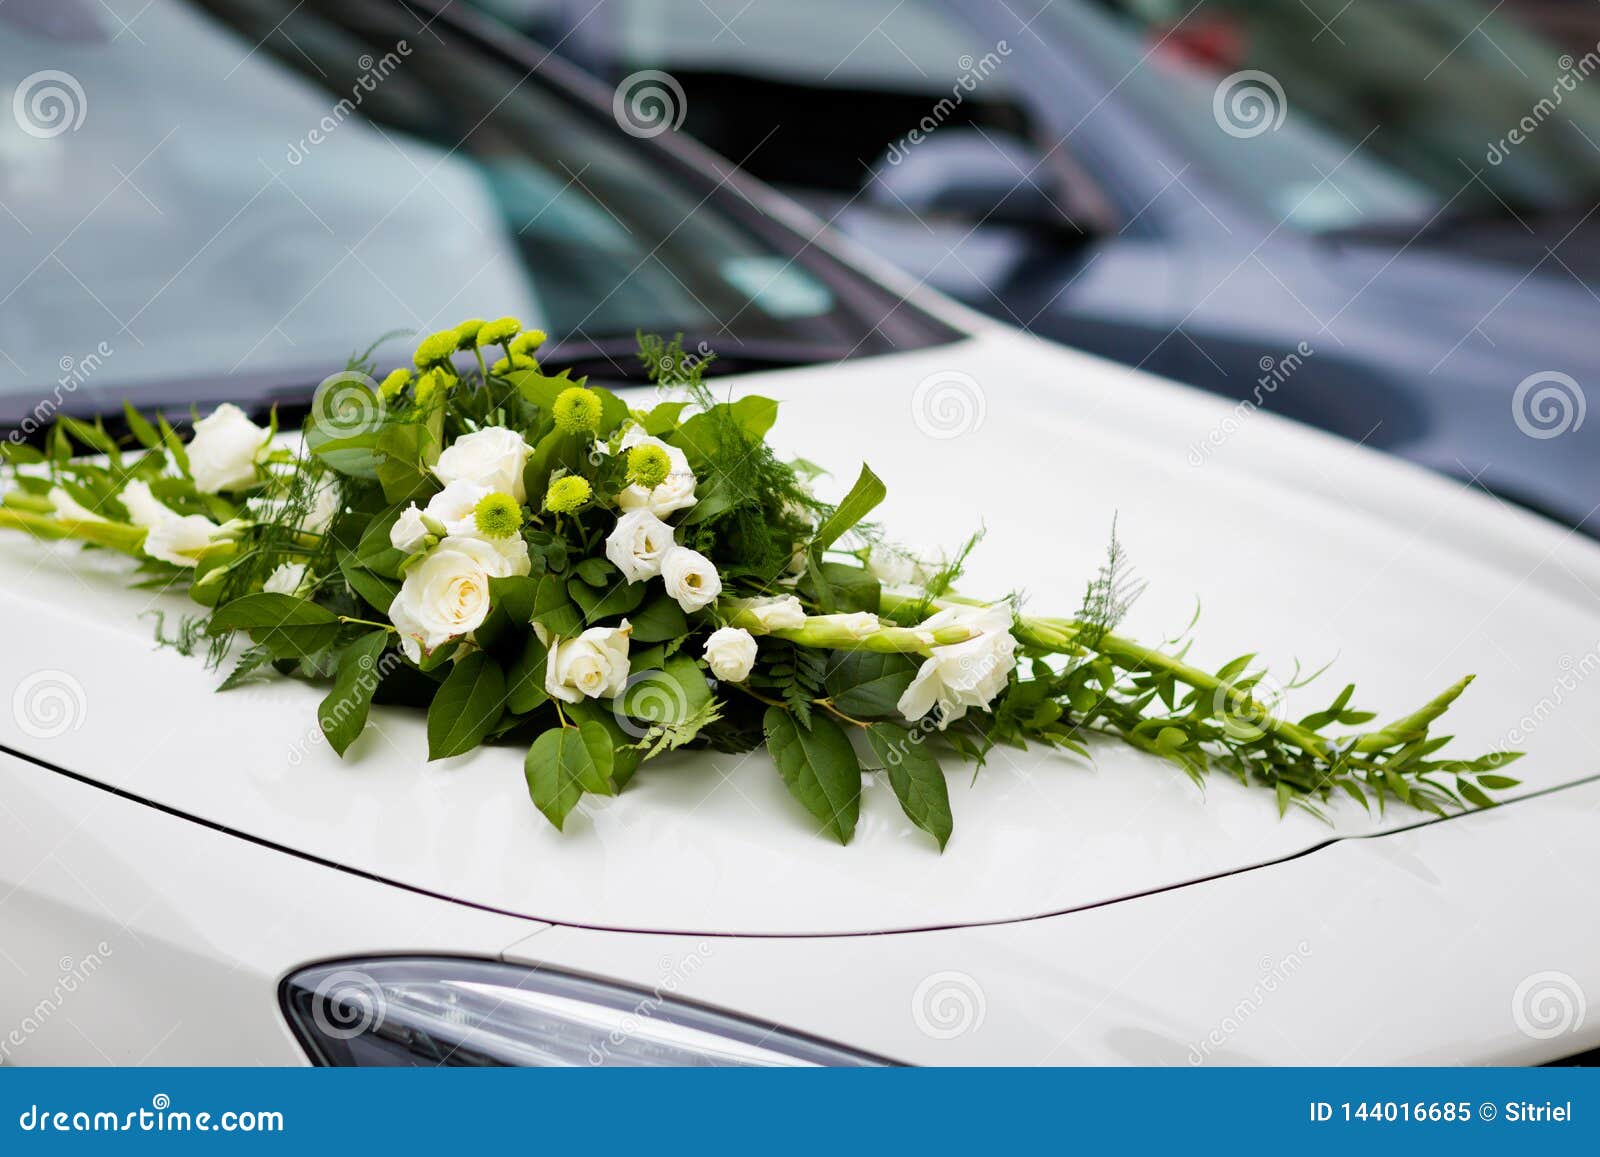 https://thumbs.dreamstime.com/z/beautiful-wedding-flowers-car-decoration-detail-made-144016685.jpg